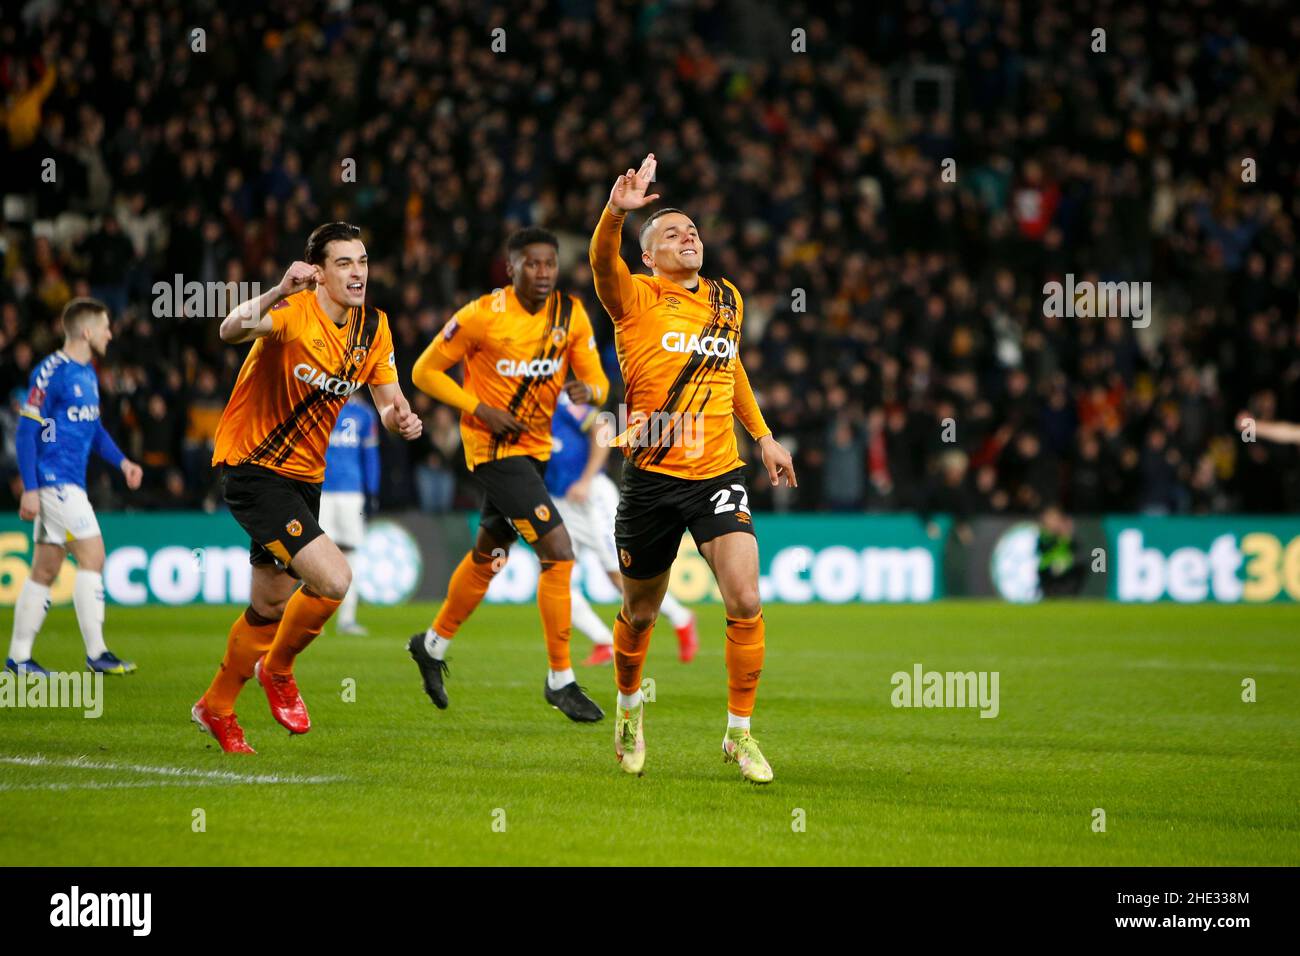 Tyler Smith #22 of Hull City Celebrates scoring a goal to make it 1-0 Stock Photo